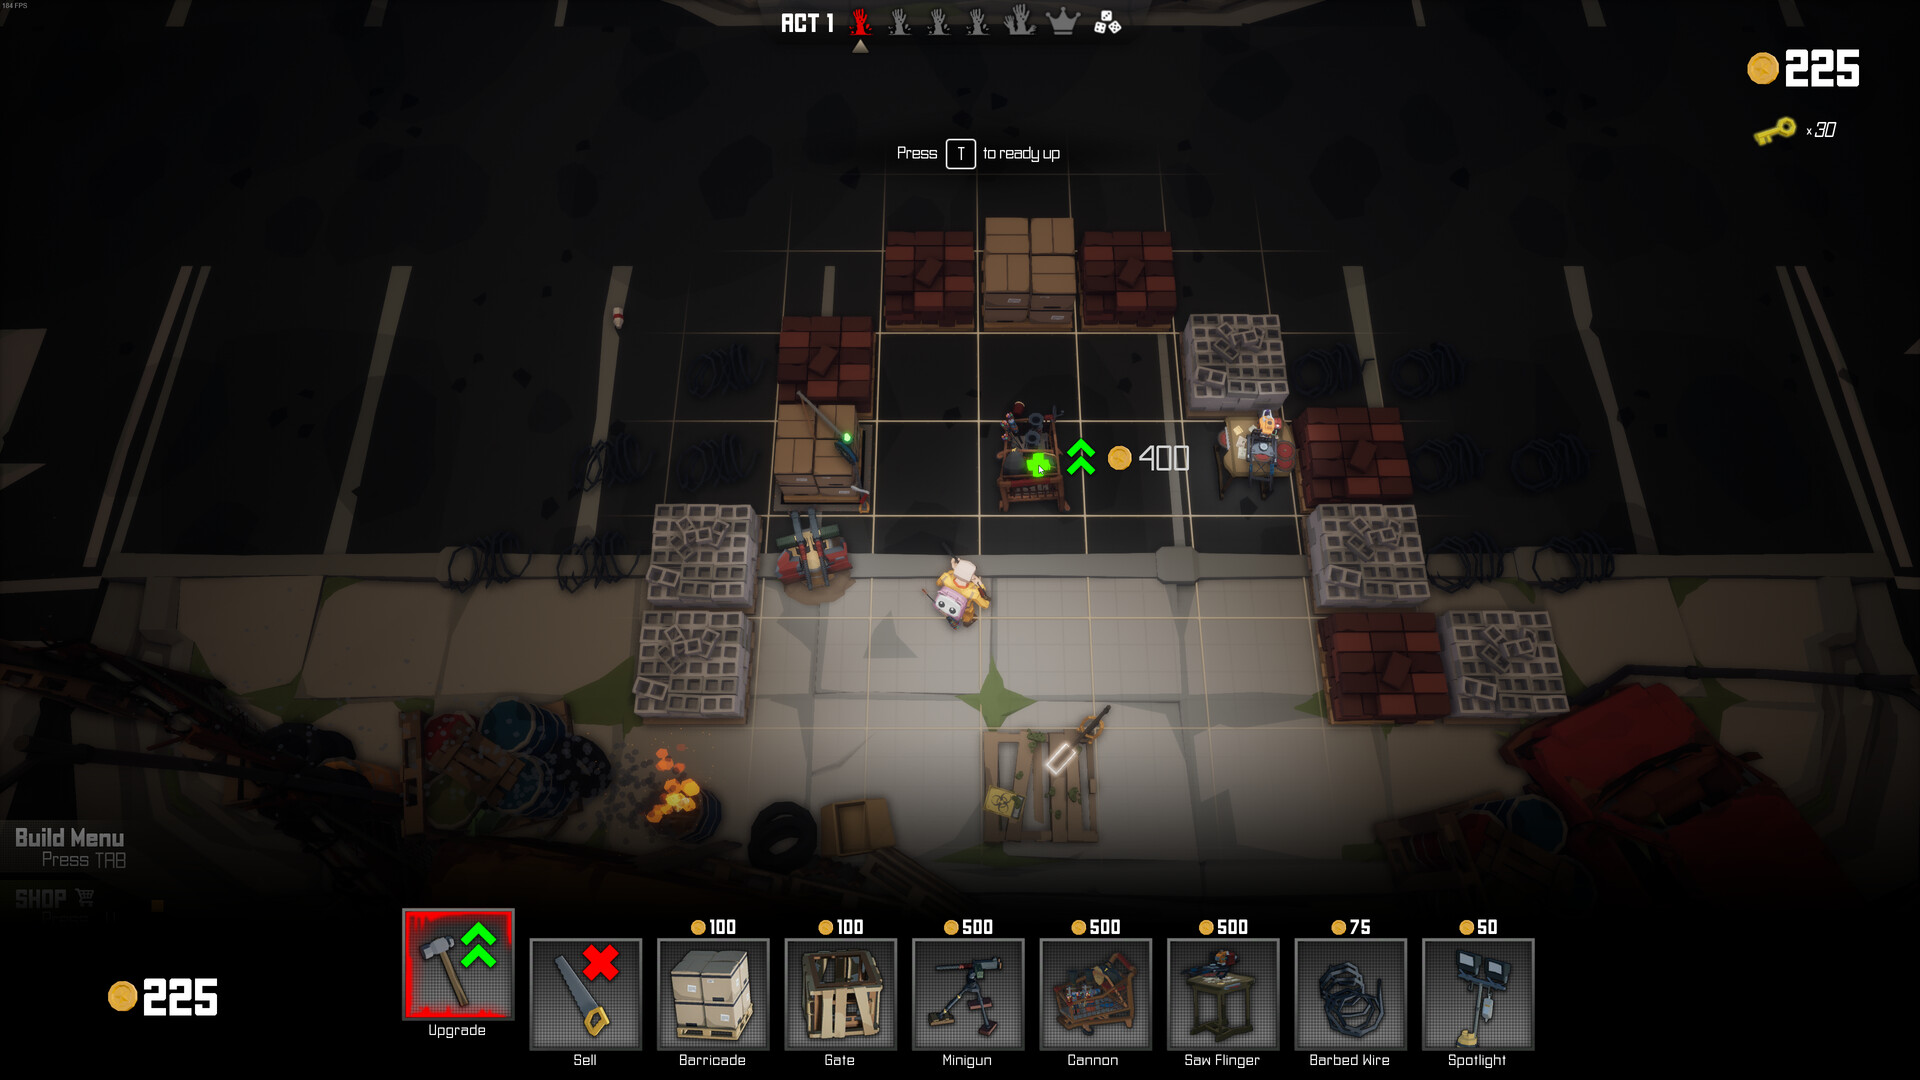 Download Zombie Builder Defense 2